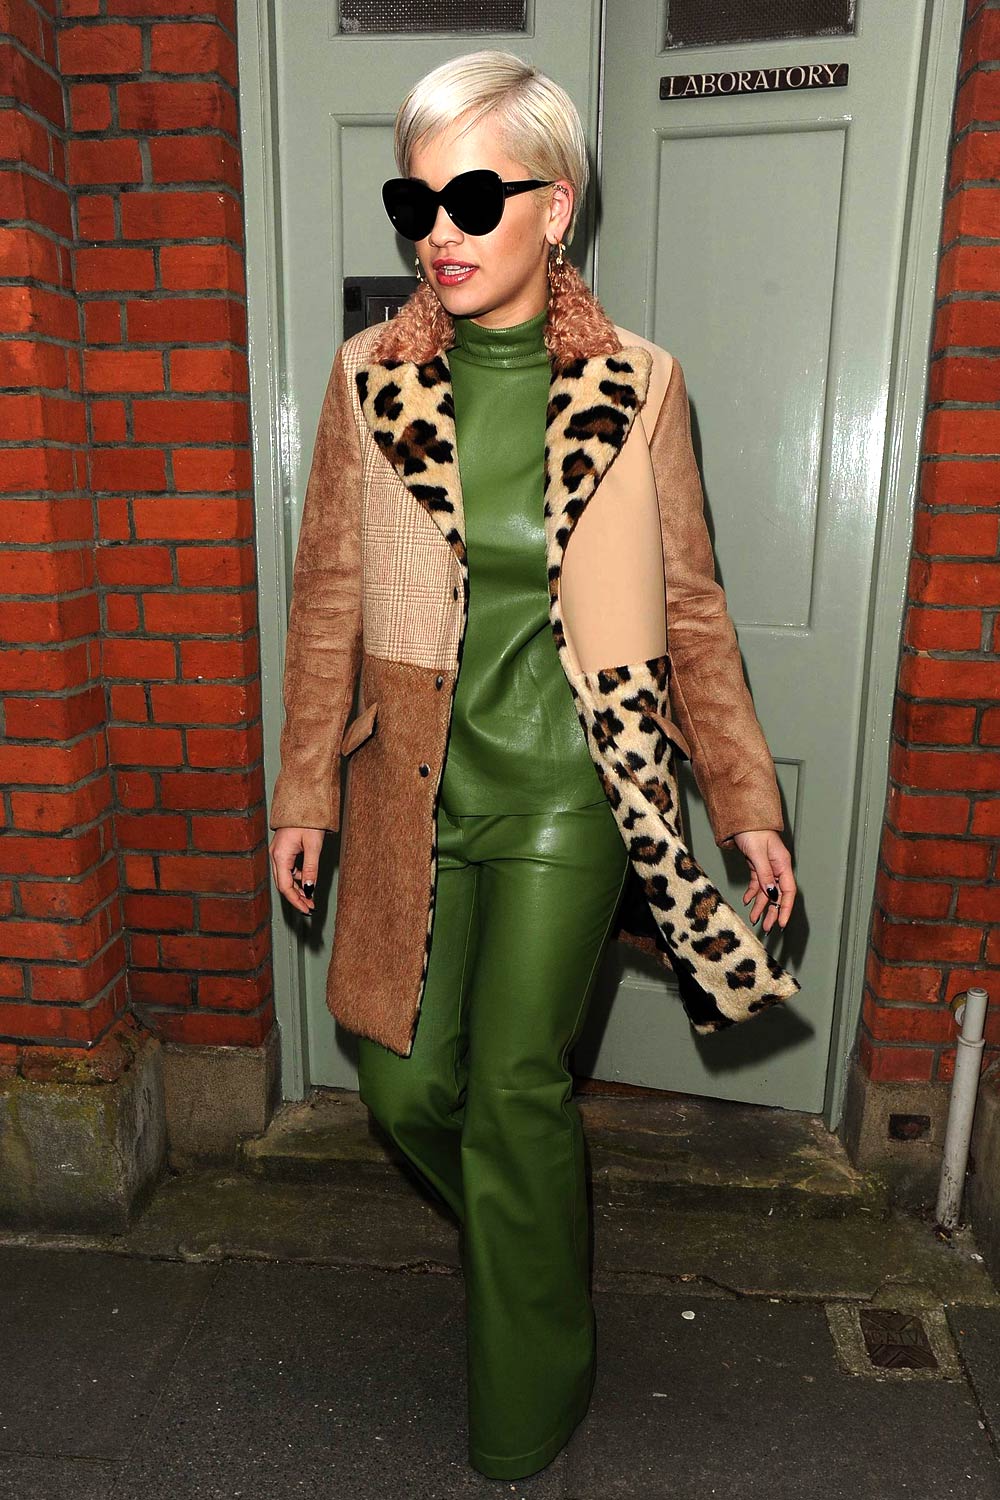 Rita Ora leaving a studio in London